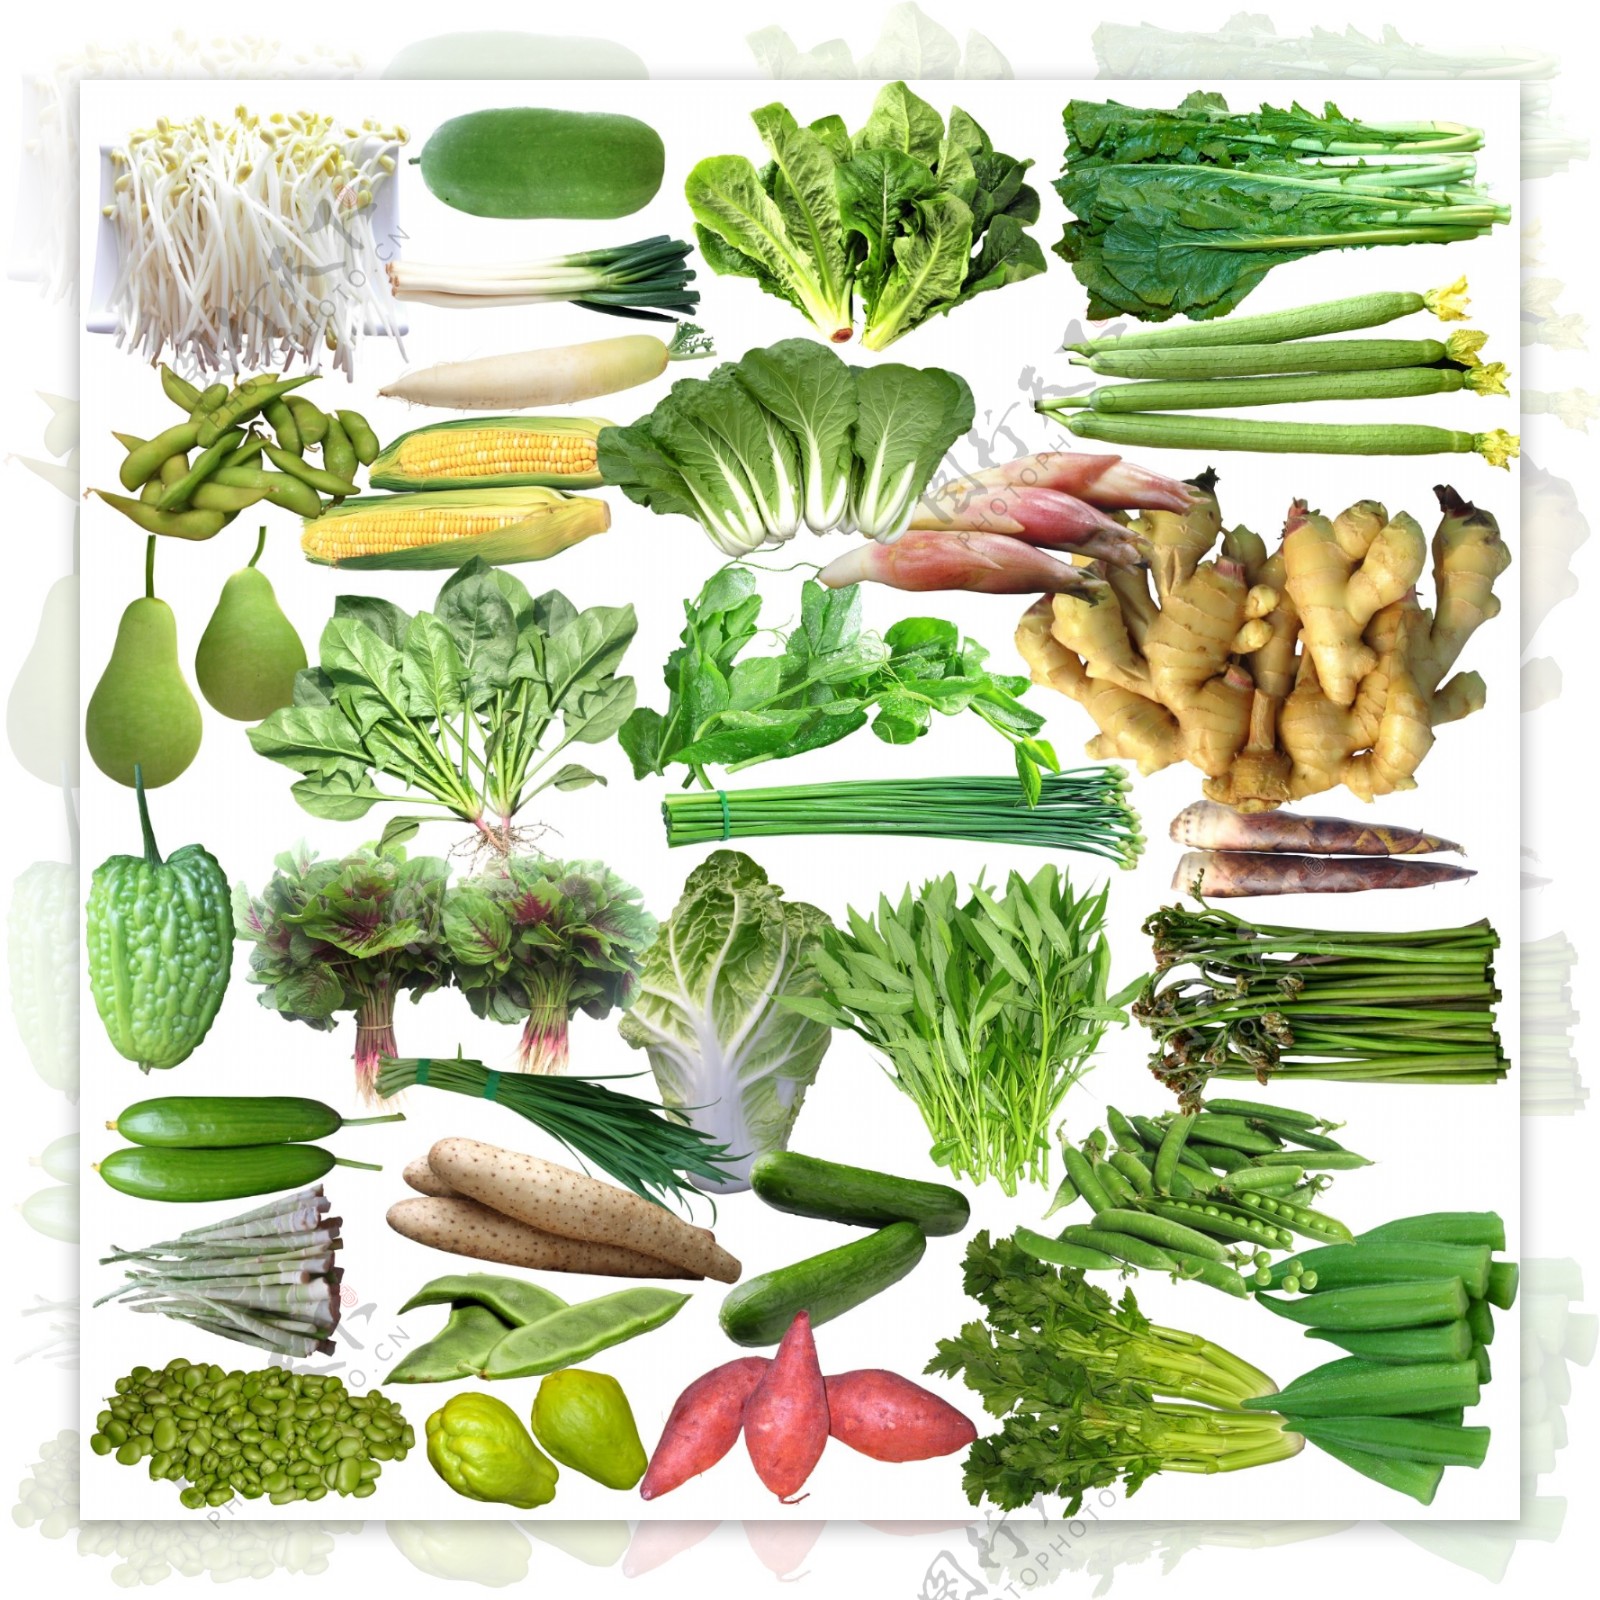 蔬菜合辑图片